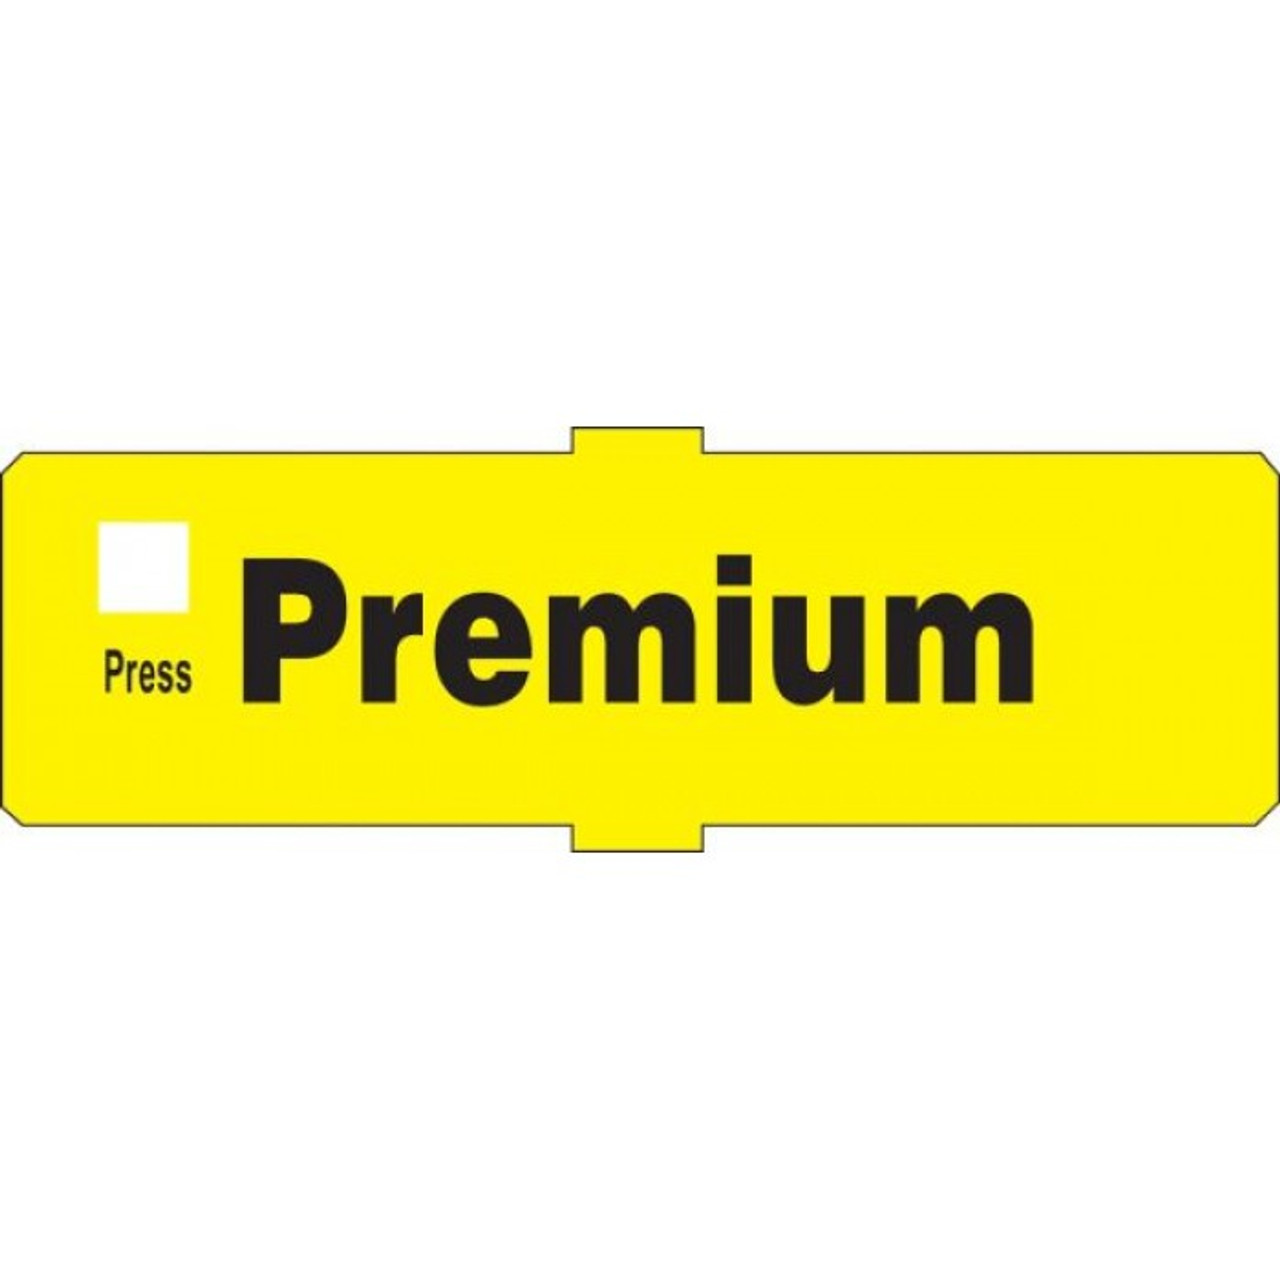 003-201800-134 - Shell Switch Graphic Premium